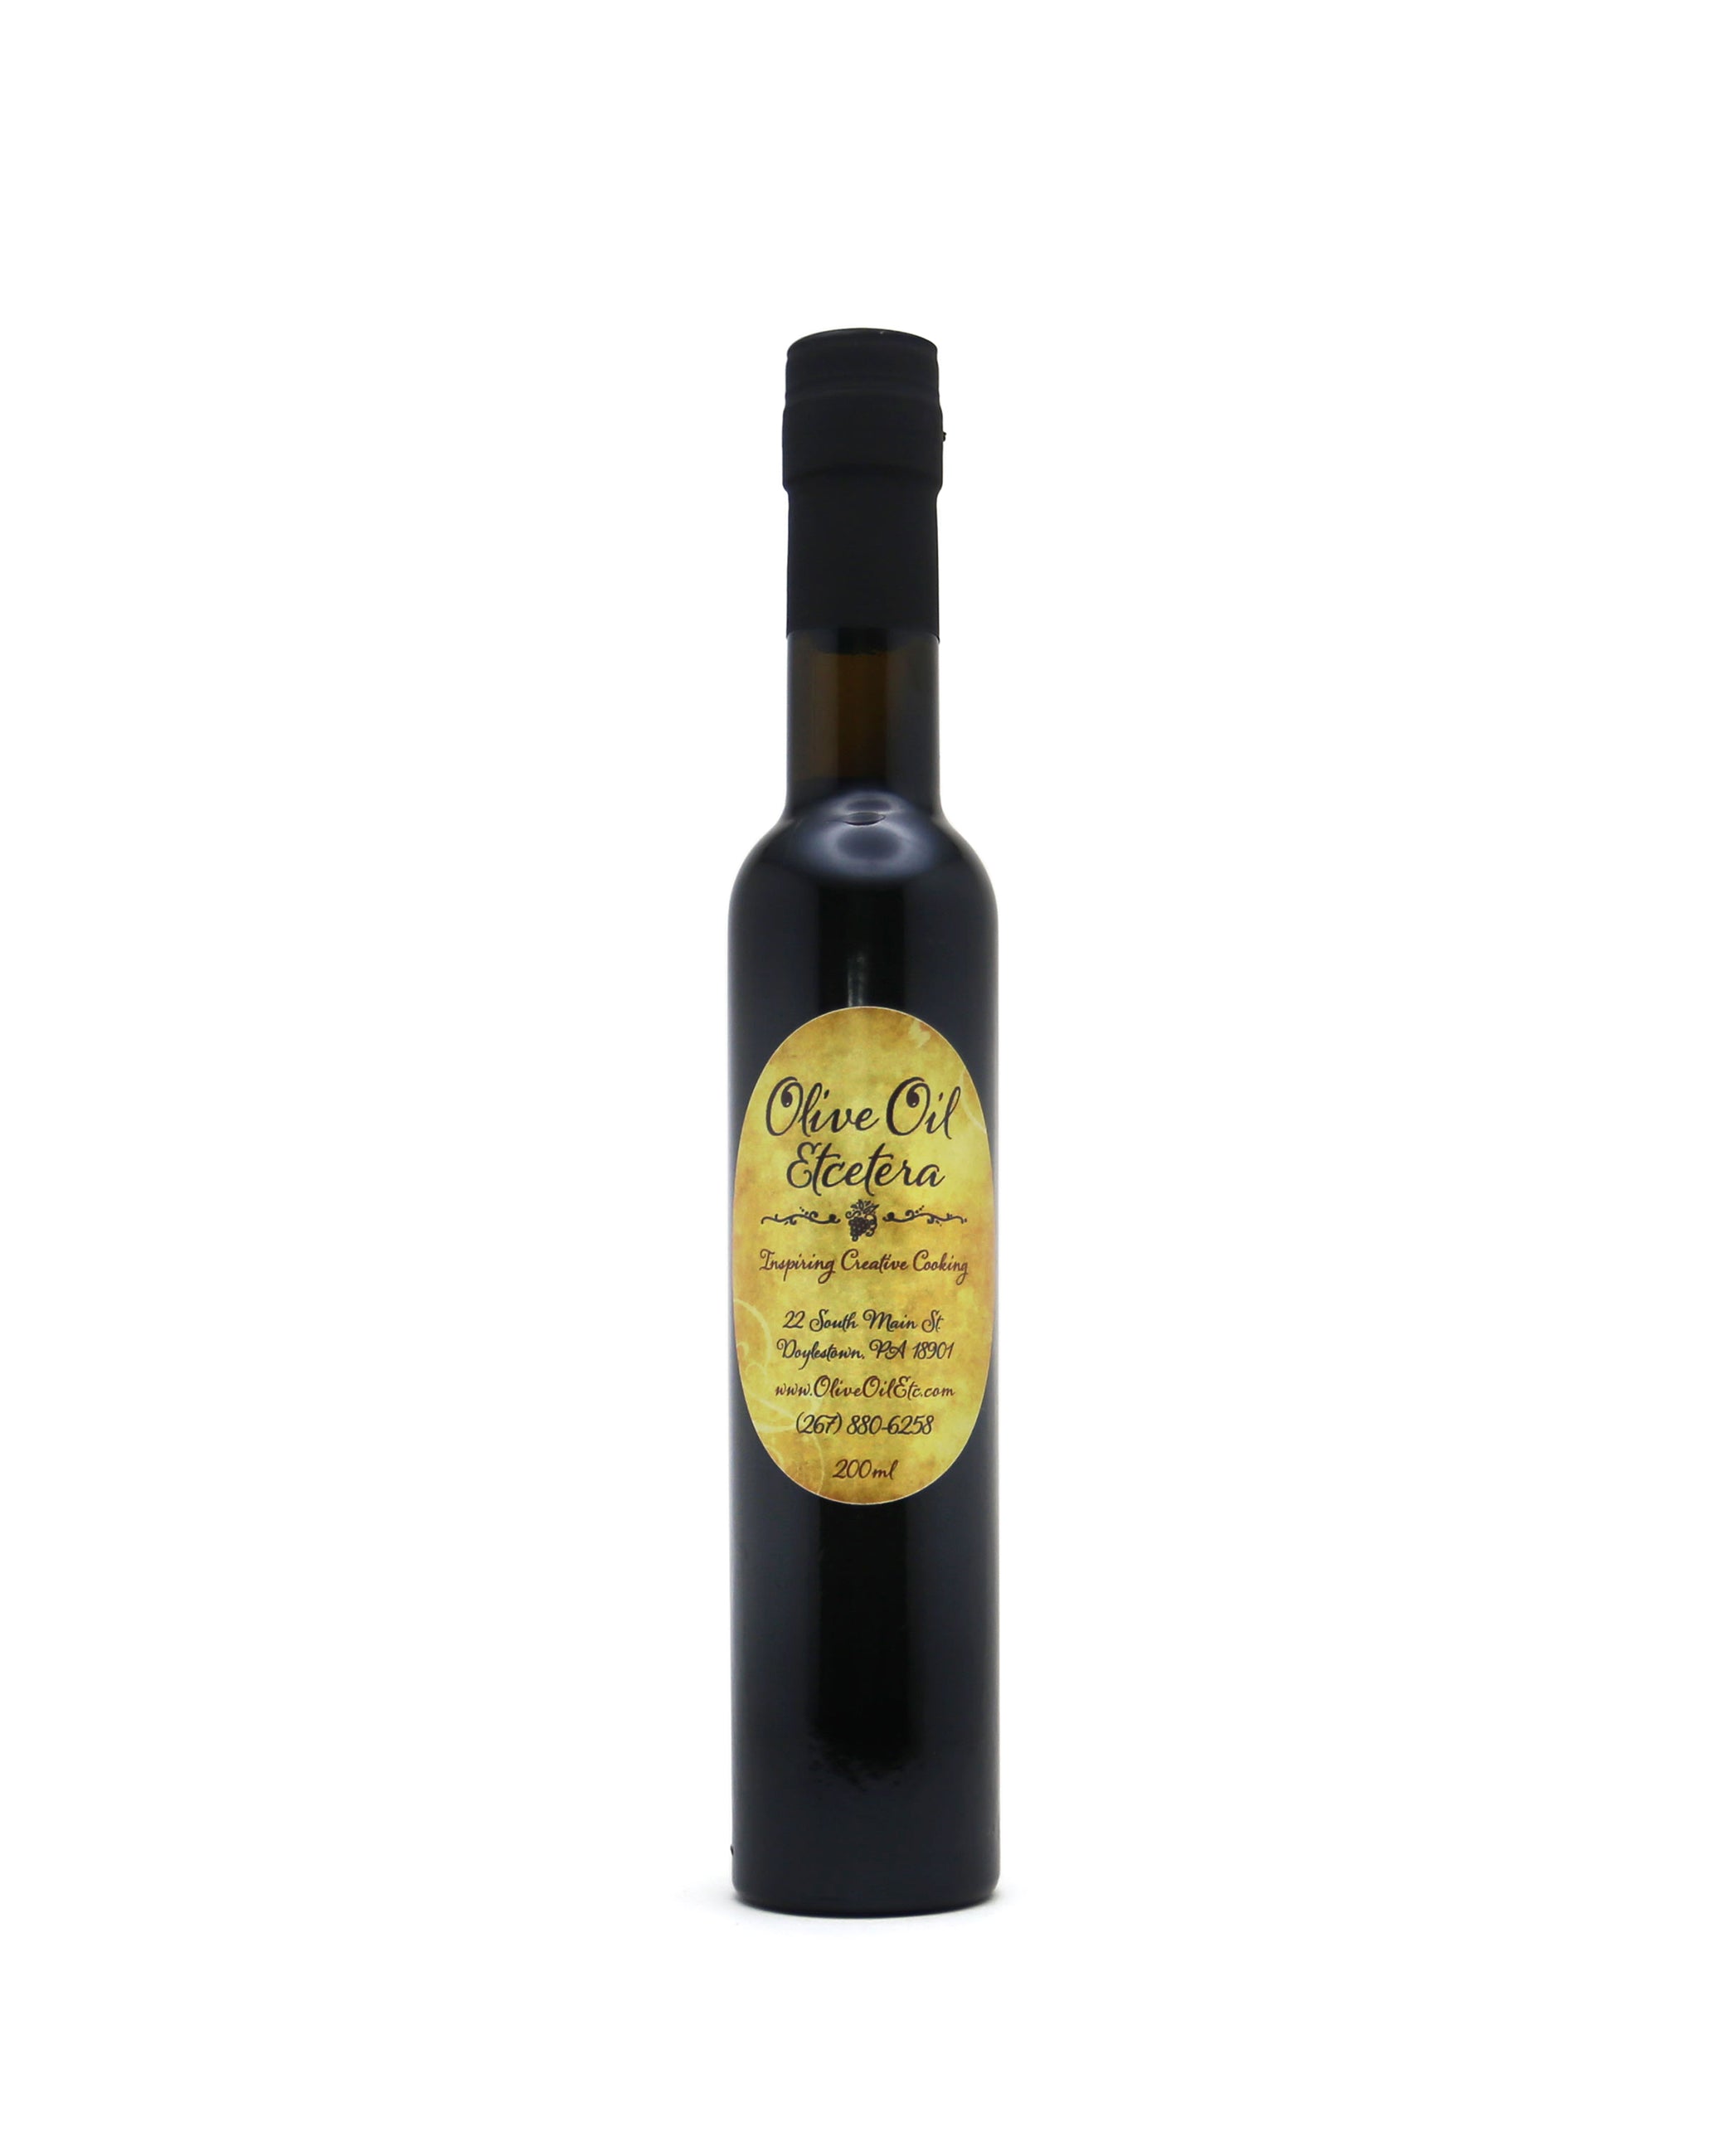 Garlic Cilantro Balsamic Vinegar - Olive Oil Etcetera - Bucks county's gourmet olive oil and vinegar shop